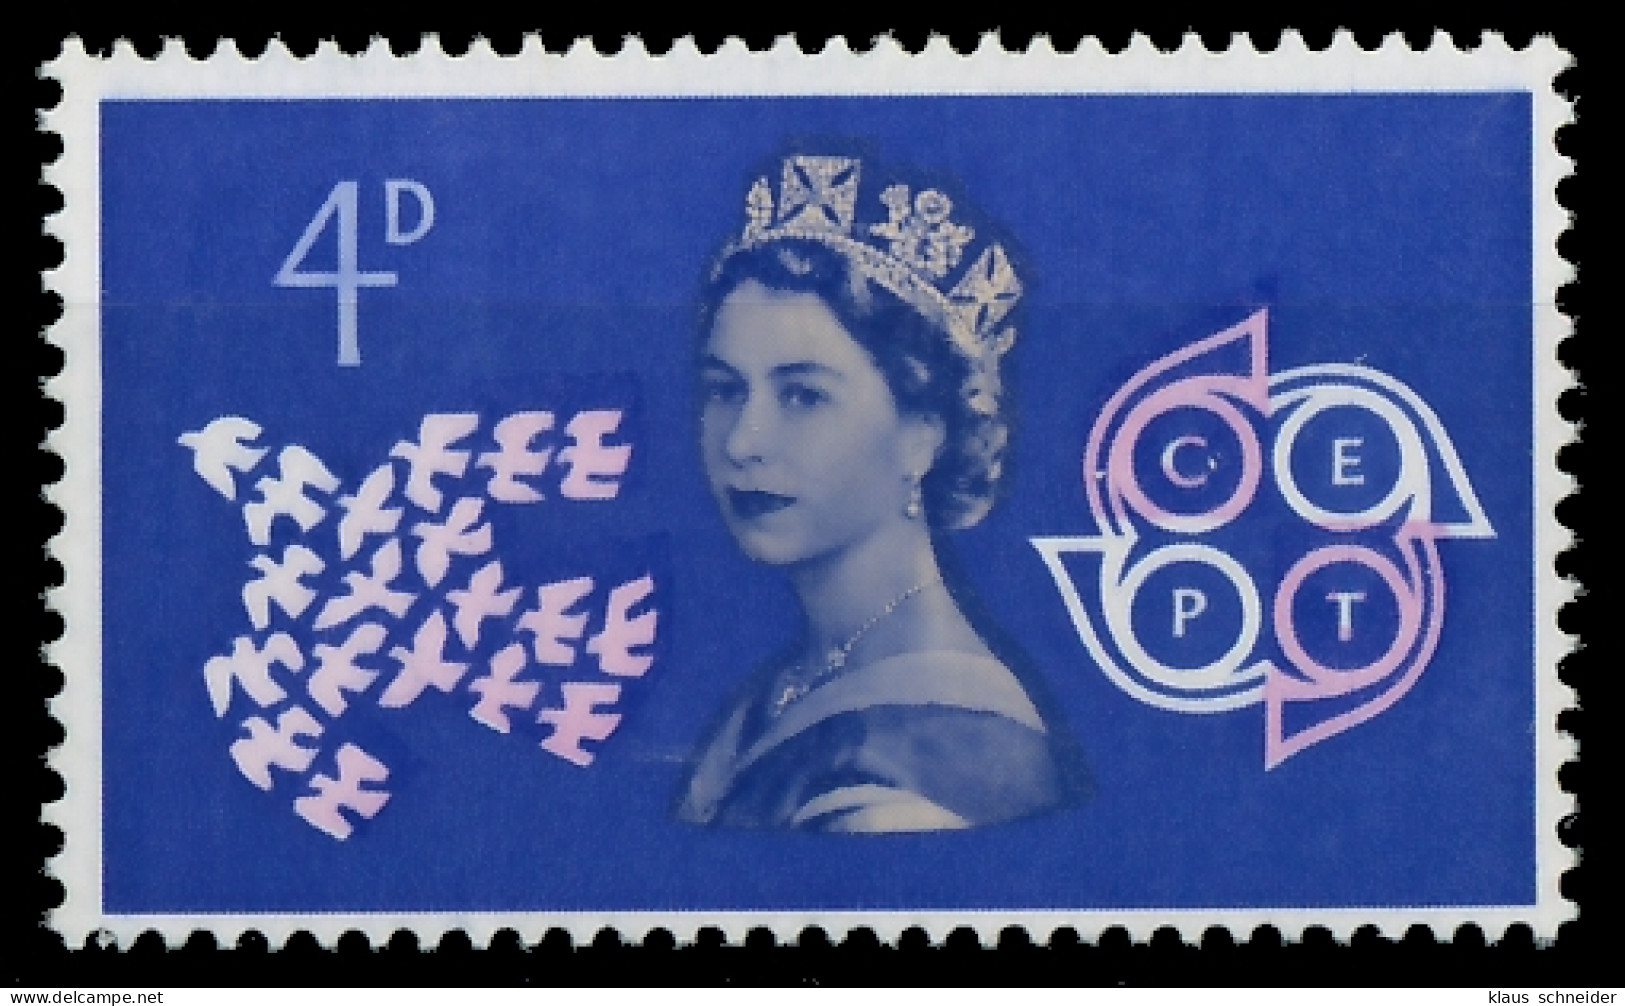 GROSSBRITANNIEN 1961 Nr 347 Postfrisch SA1D90A - Unused Stamps